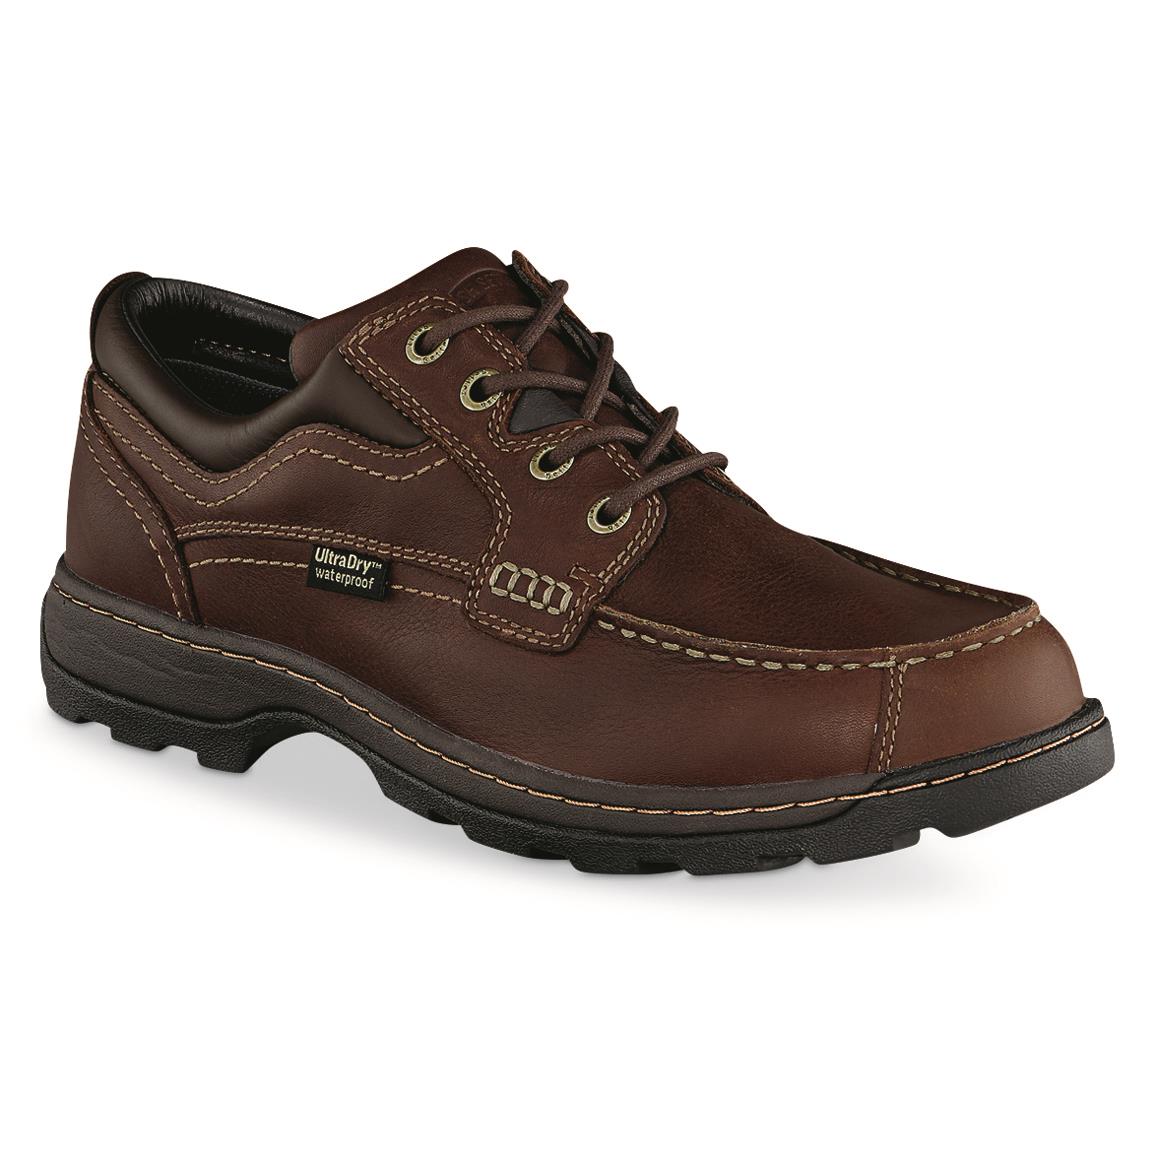 Irish Setter Men's Soft Paw Waterproof Oxford Shoes, Brown